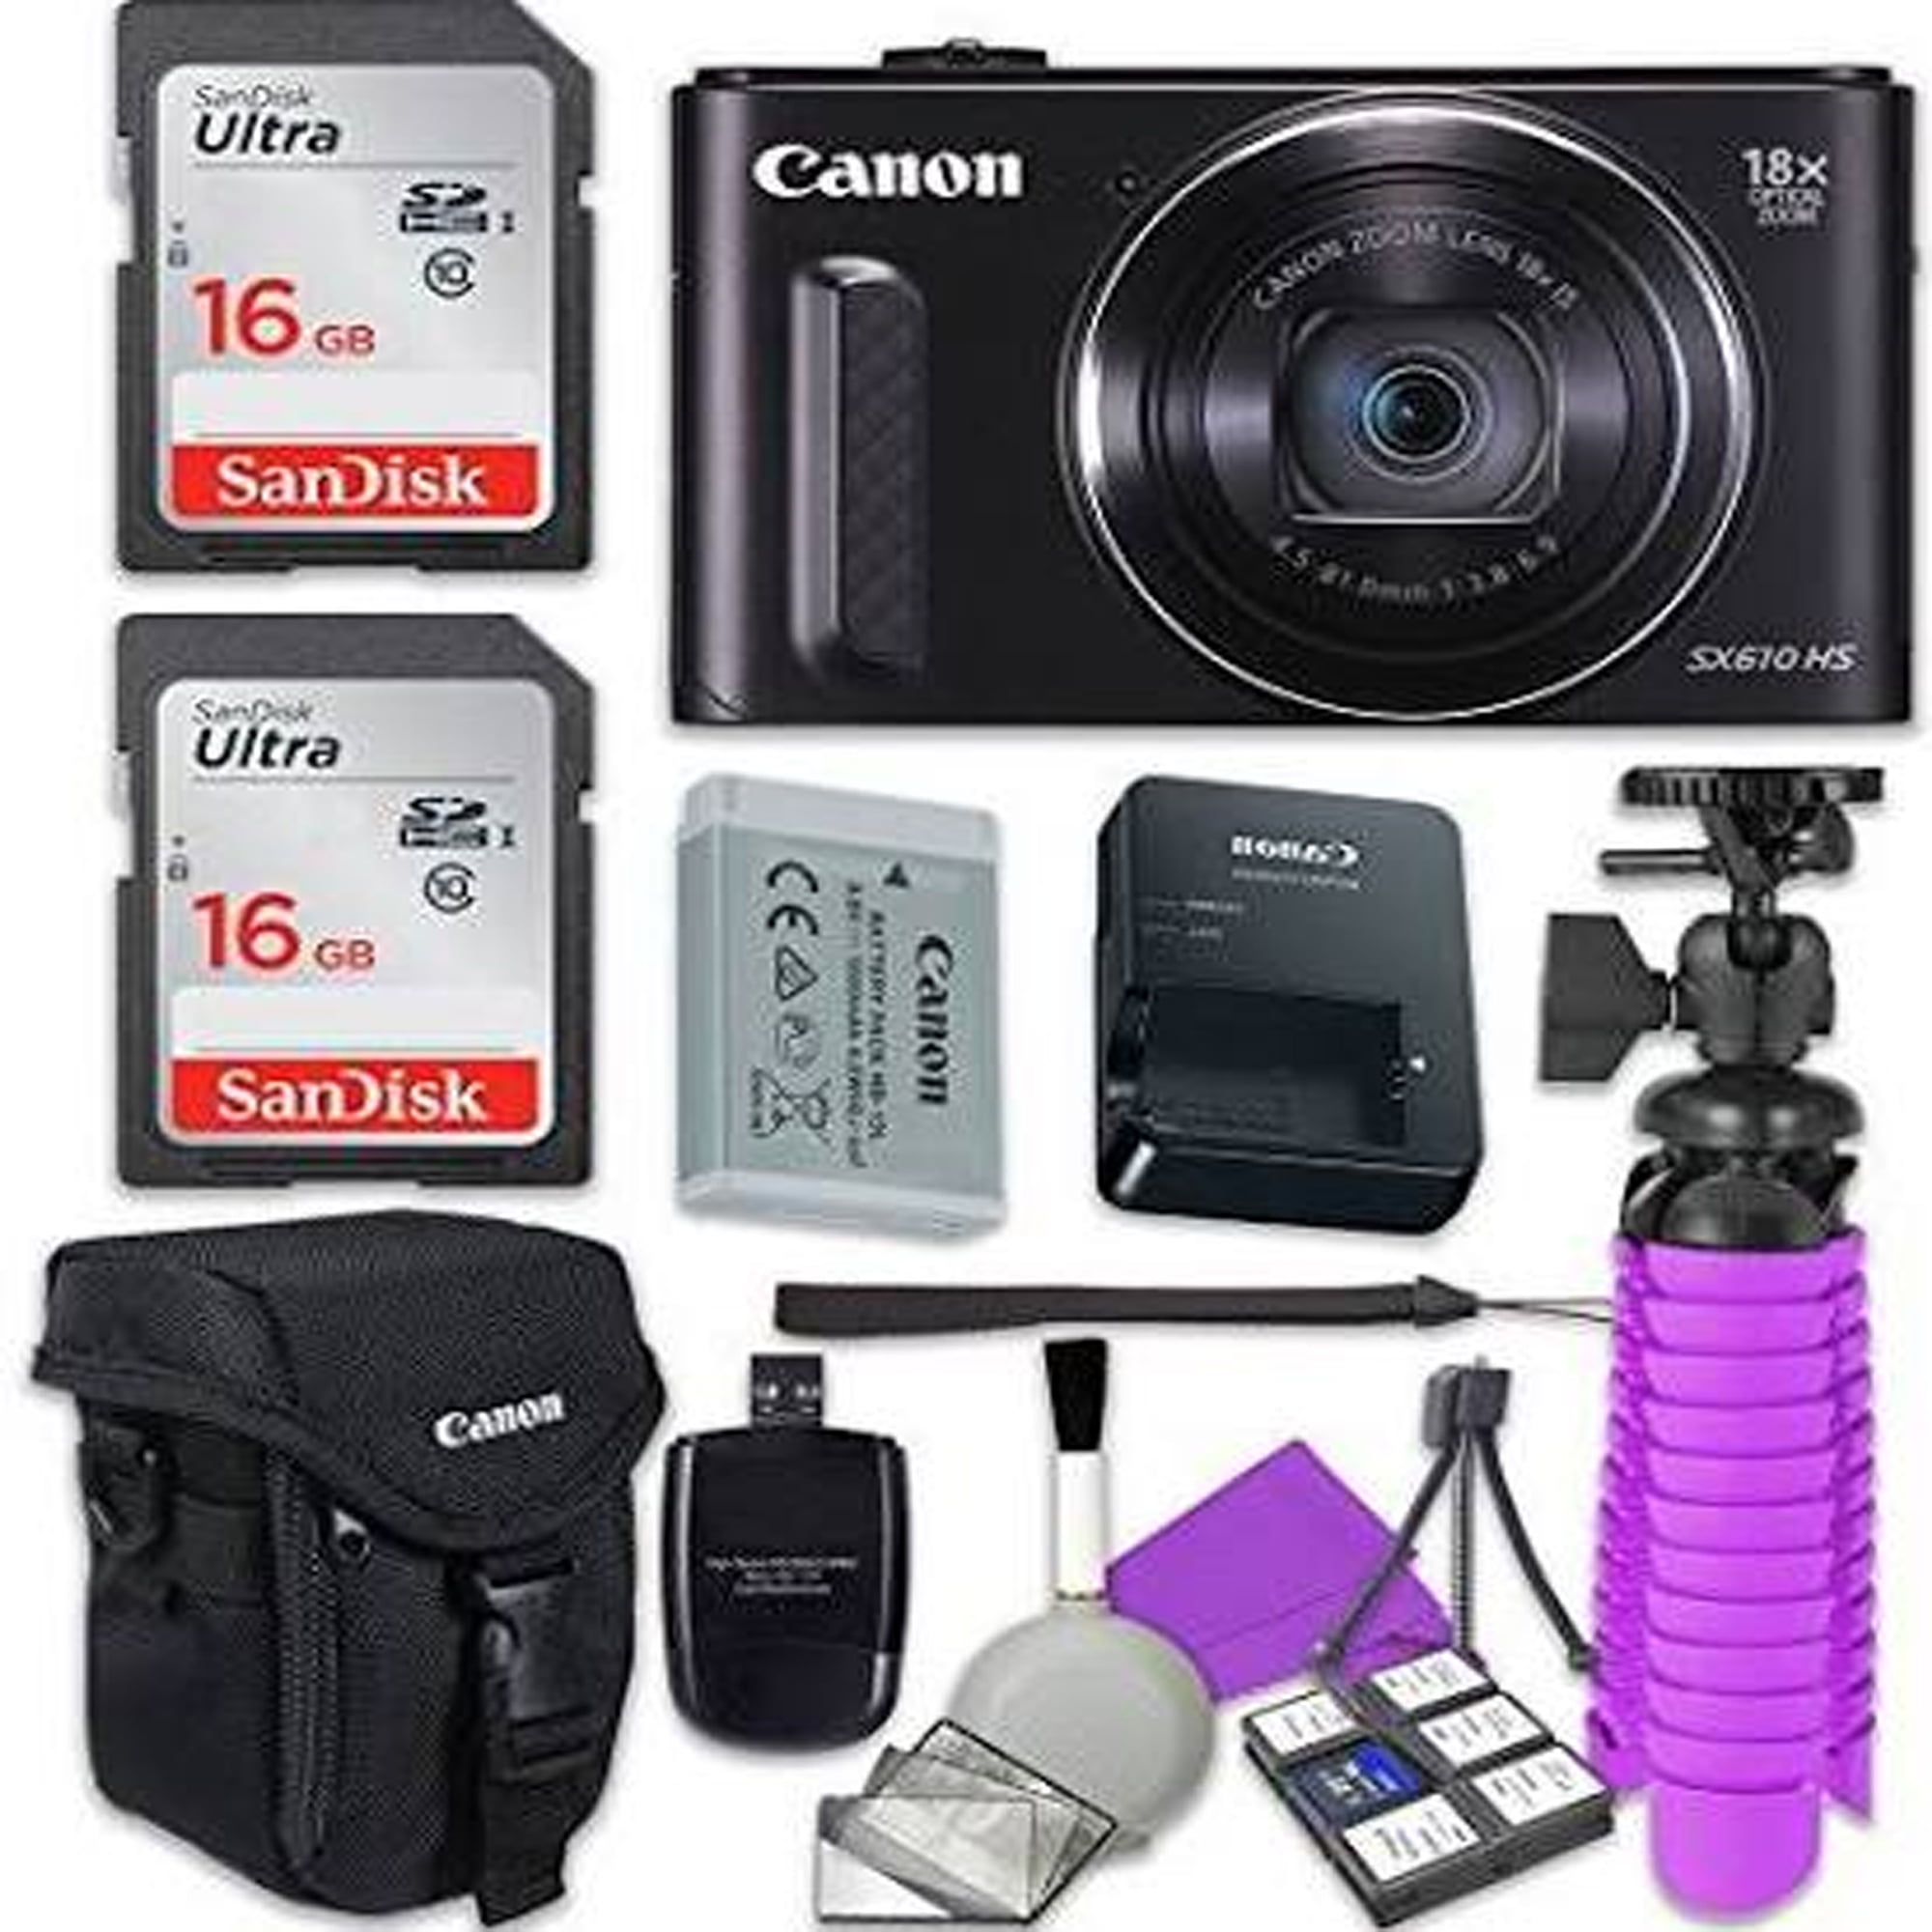 Canon PowerShot SX610 HS Wi-Fi Digital Camera (Black) with 2x